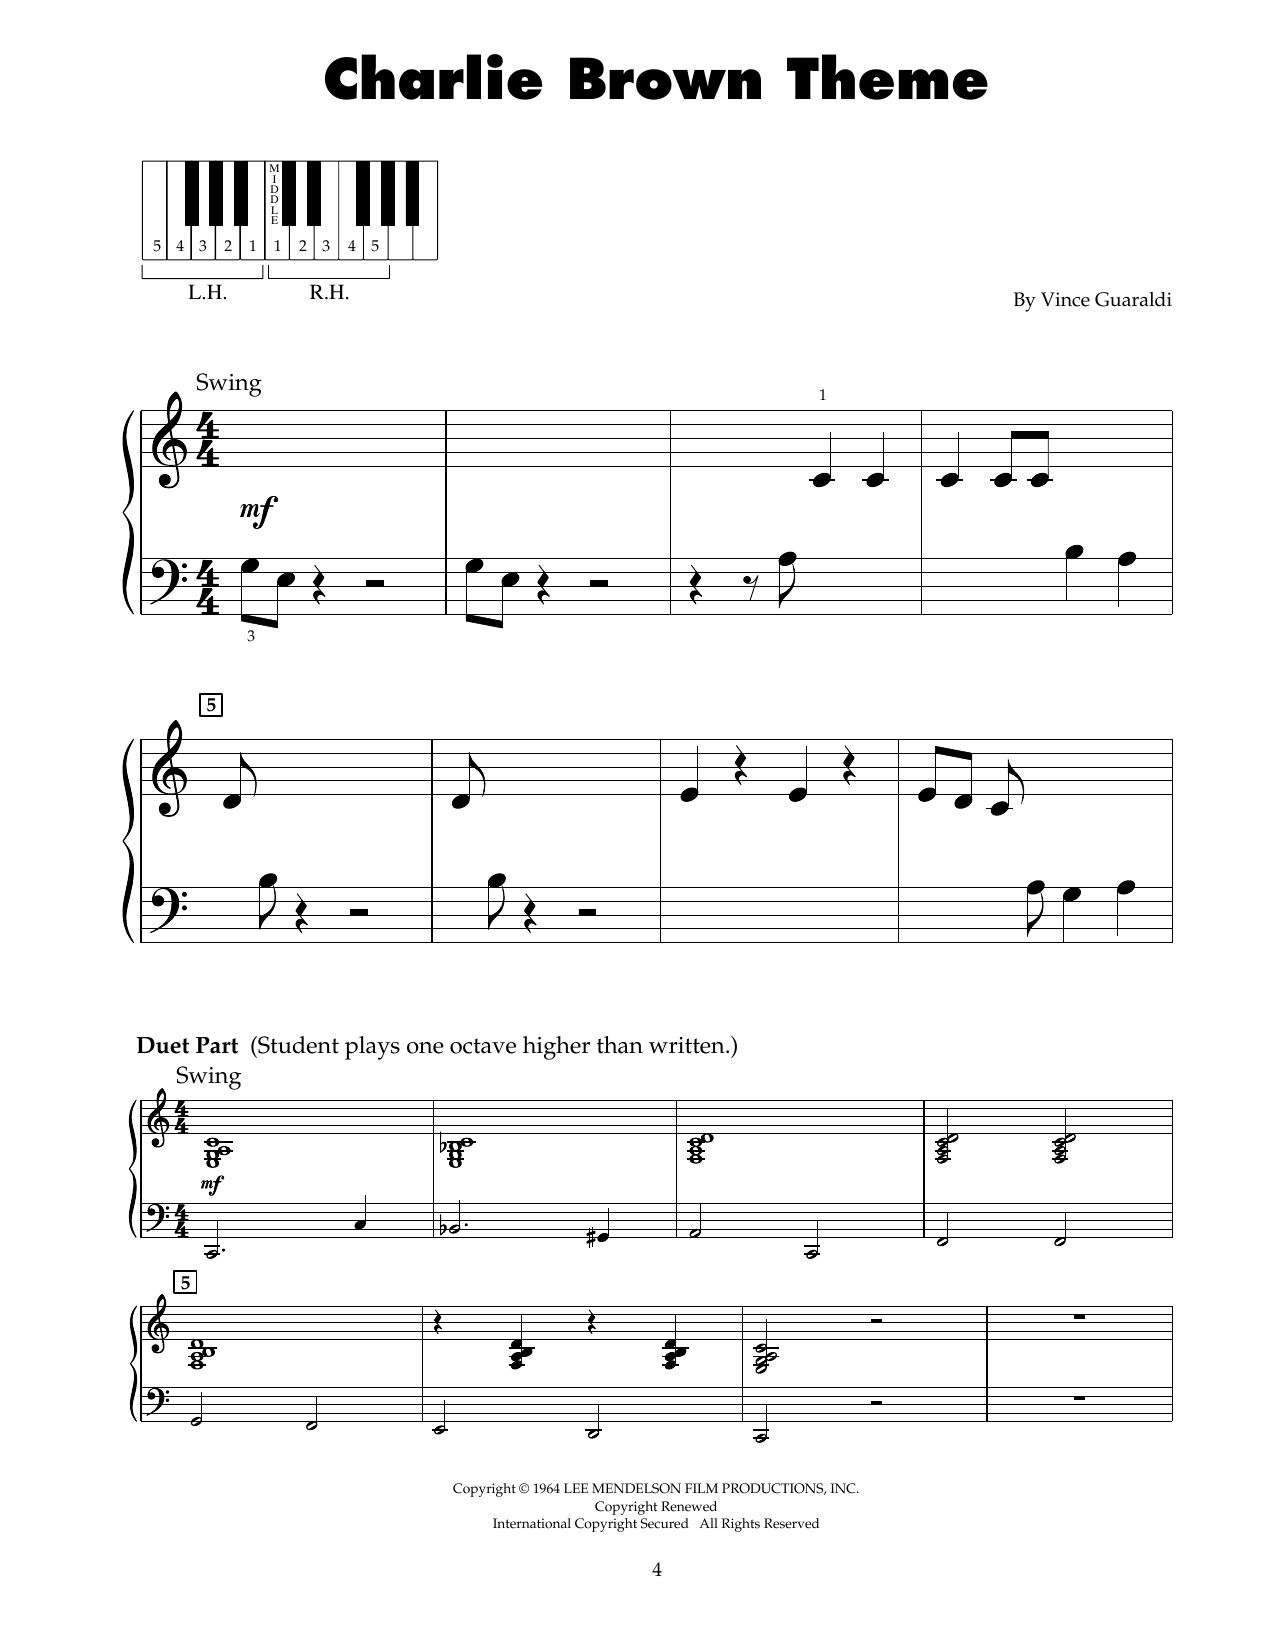 Download Vince Guaraldi Charlie Brown Theme Sheet Music